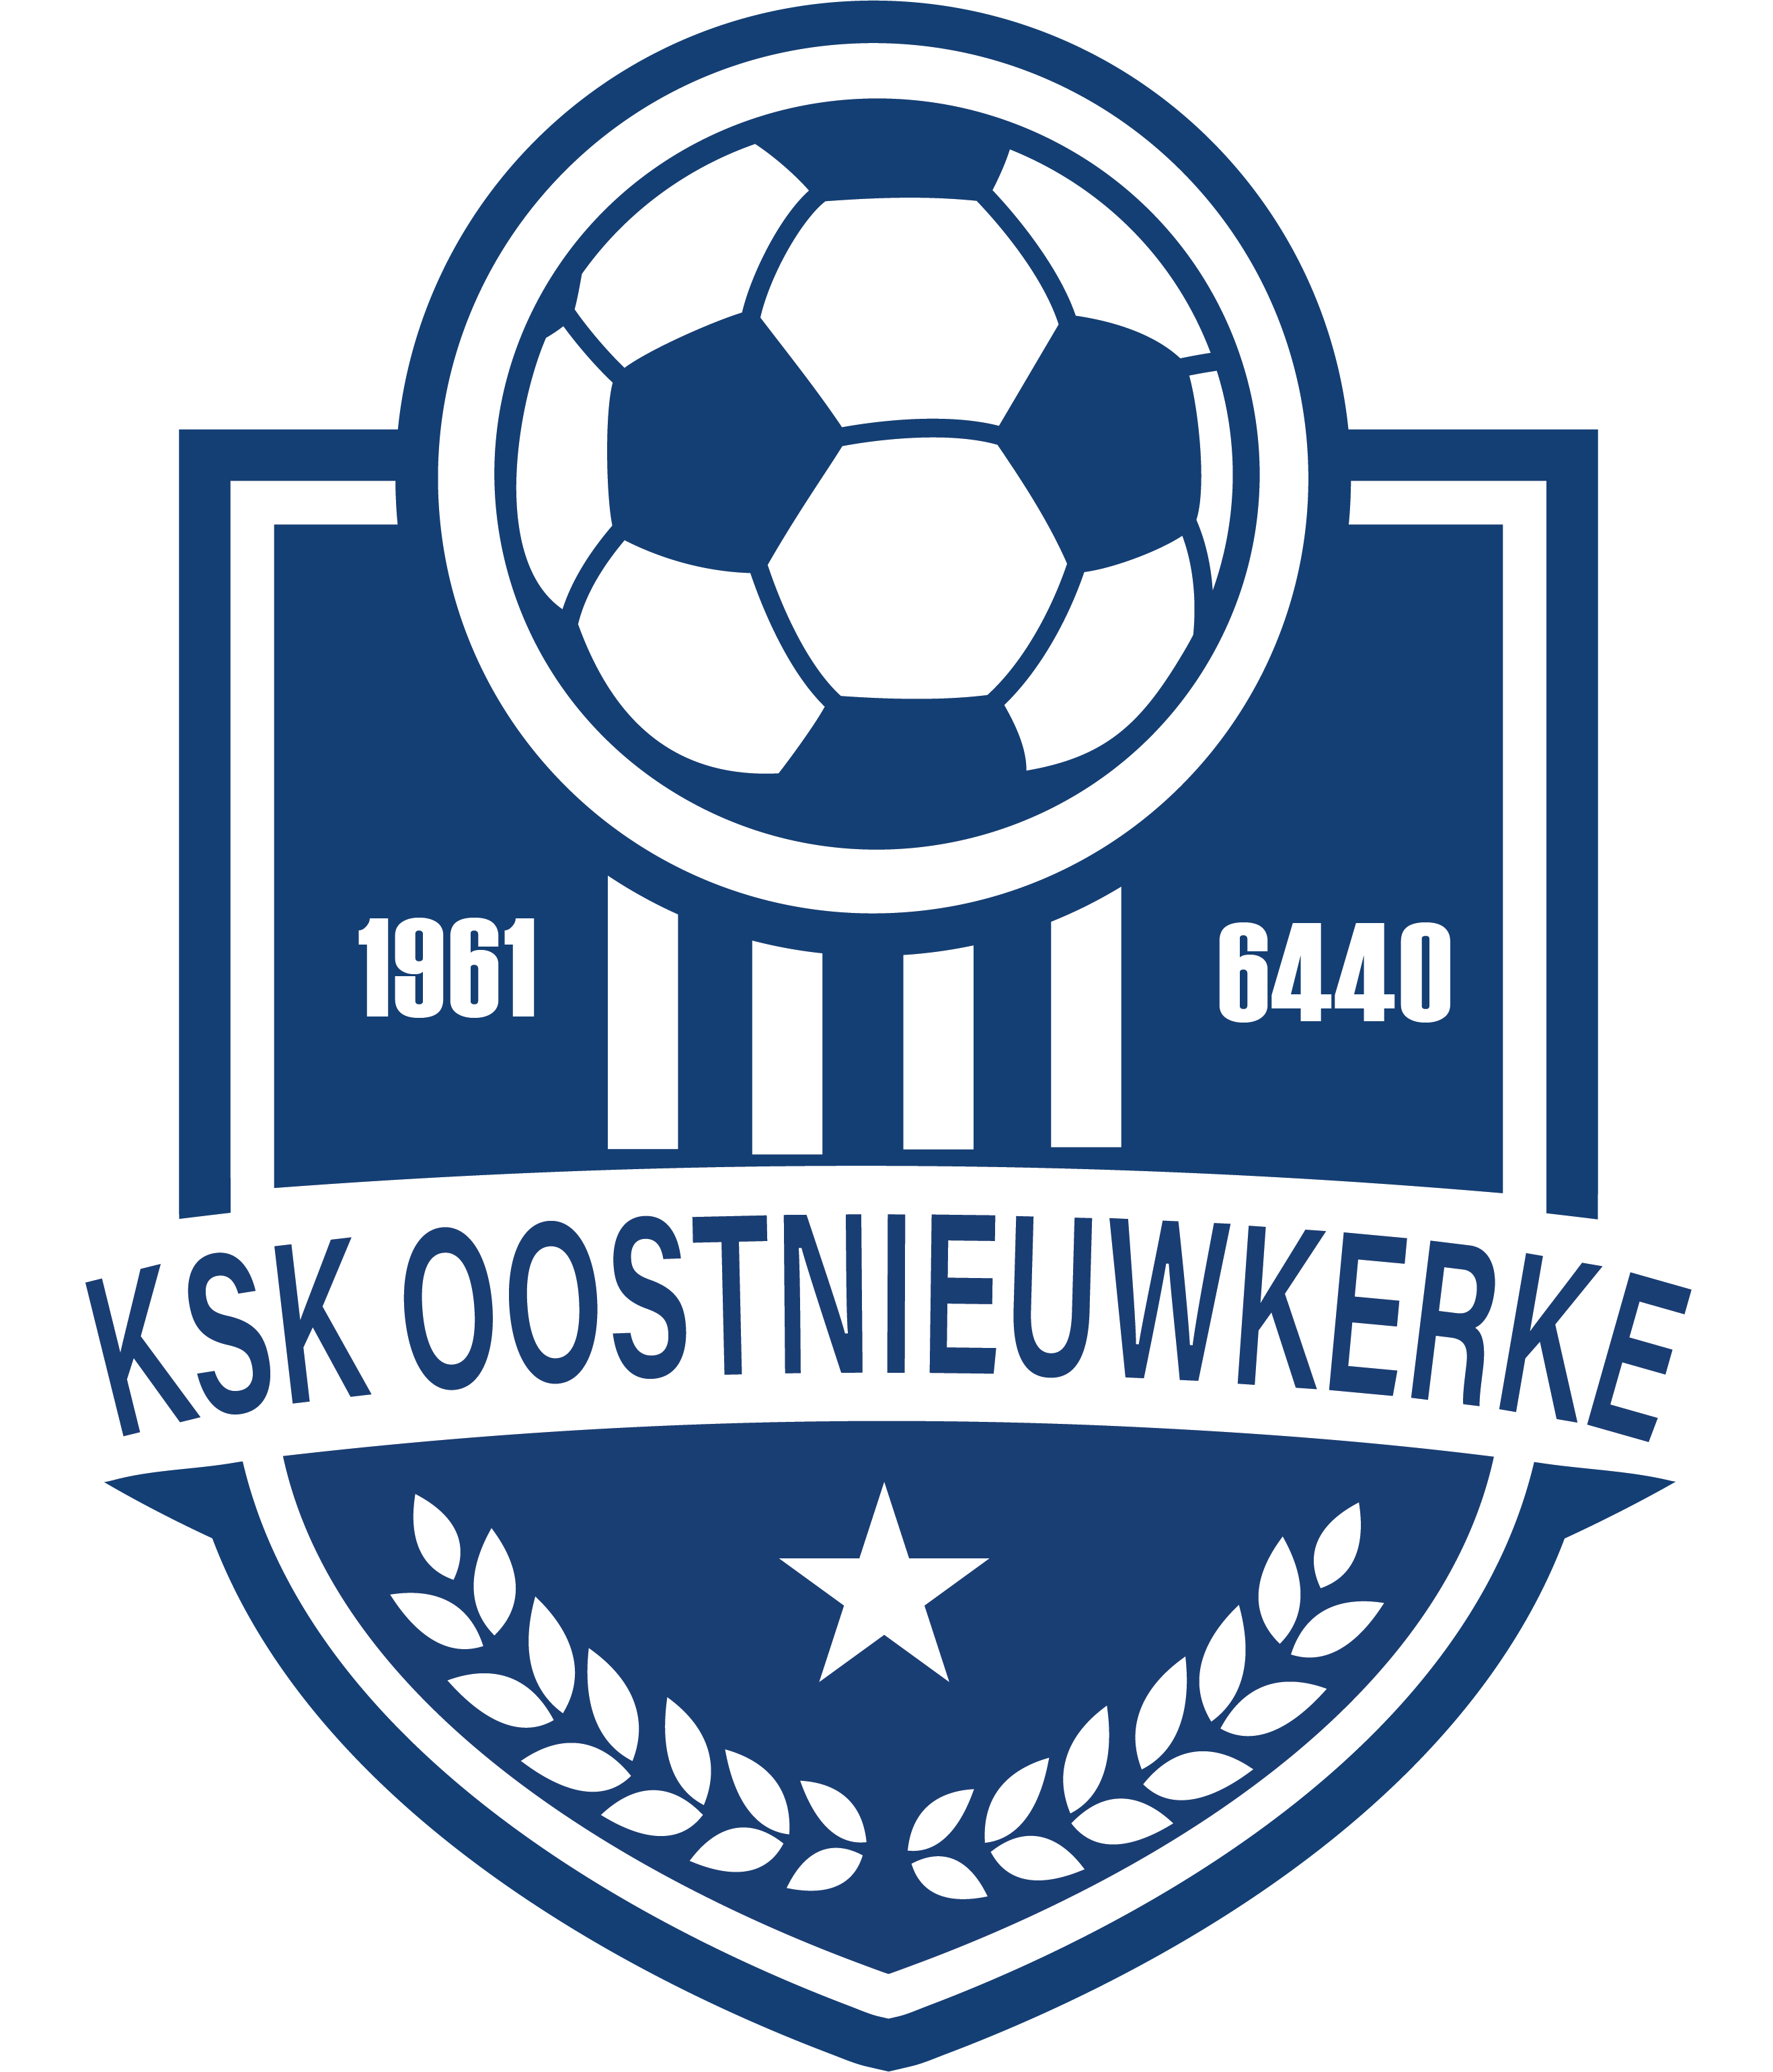 KSK Oostnieuwkerke